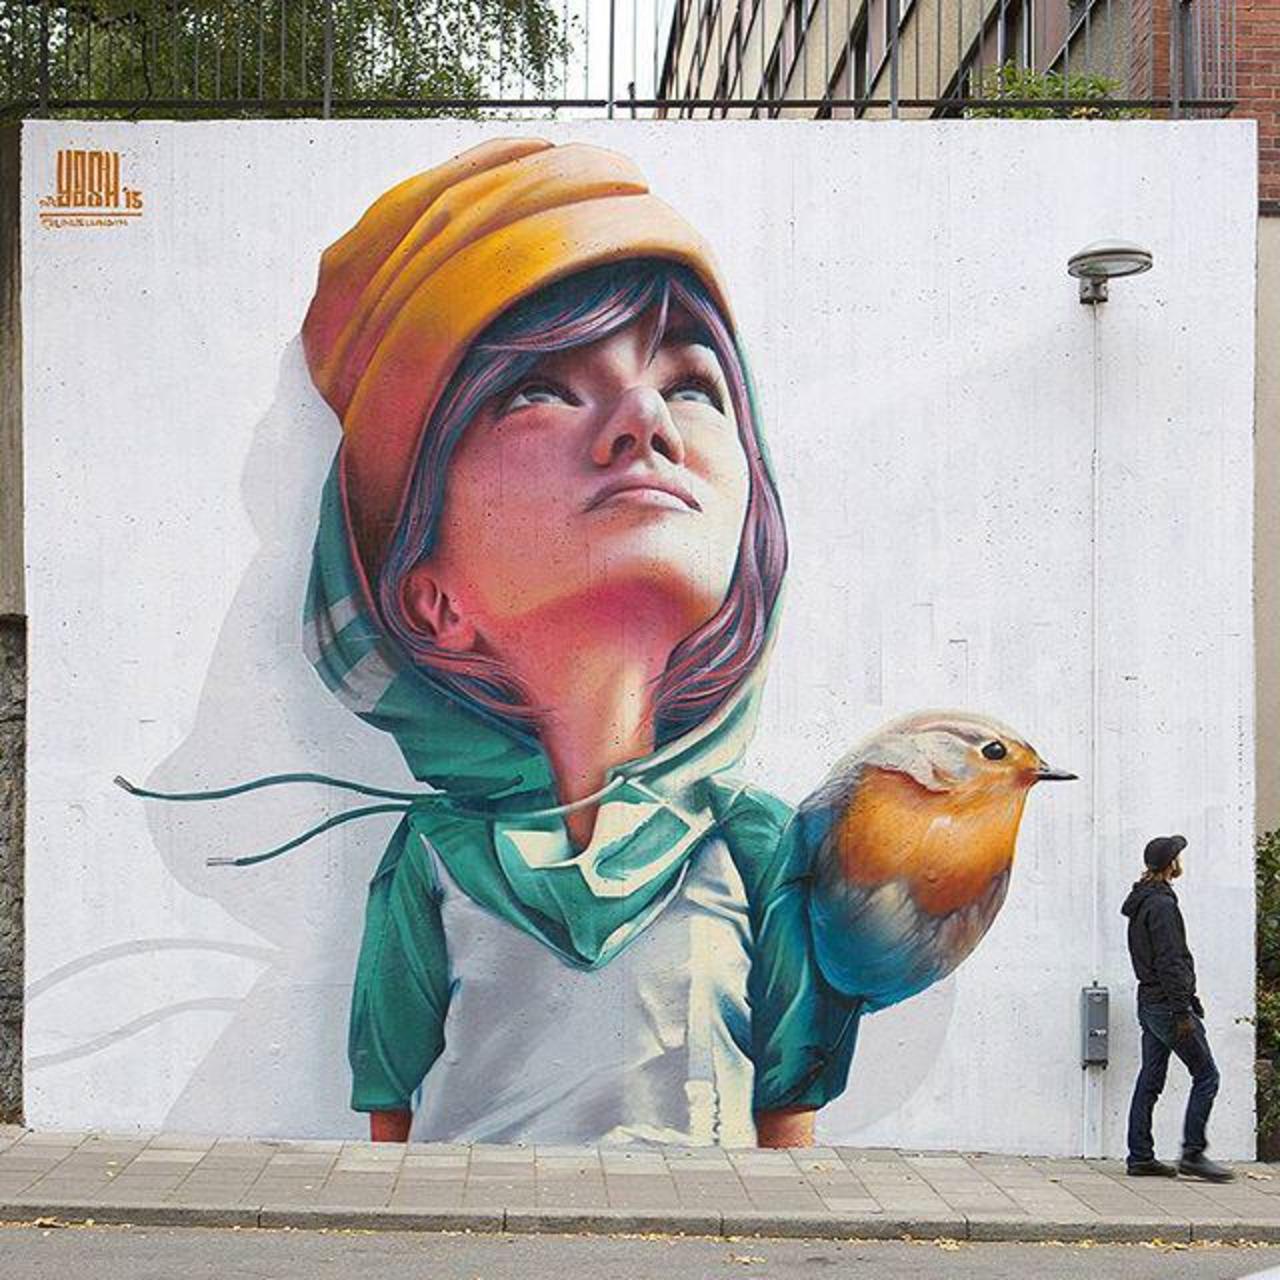 RT @BigArtBoost "RT @cakozlem76: Yash #streetart #urbanart #graffiti #BigArtBoost #Art" http://t.co/P3DCkYQfJ7